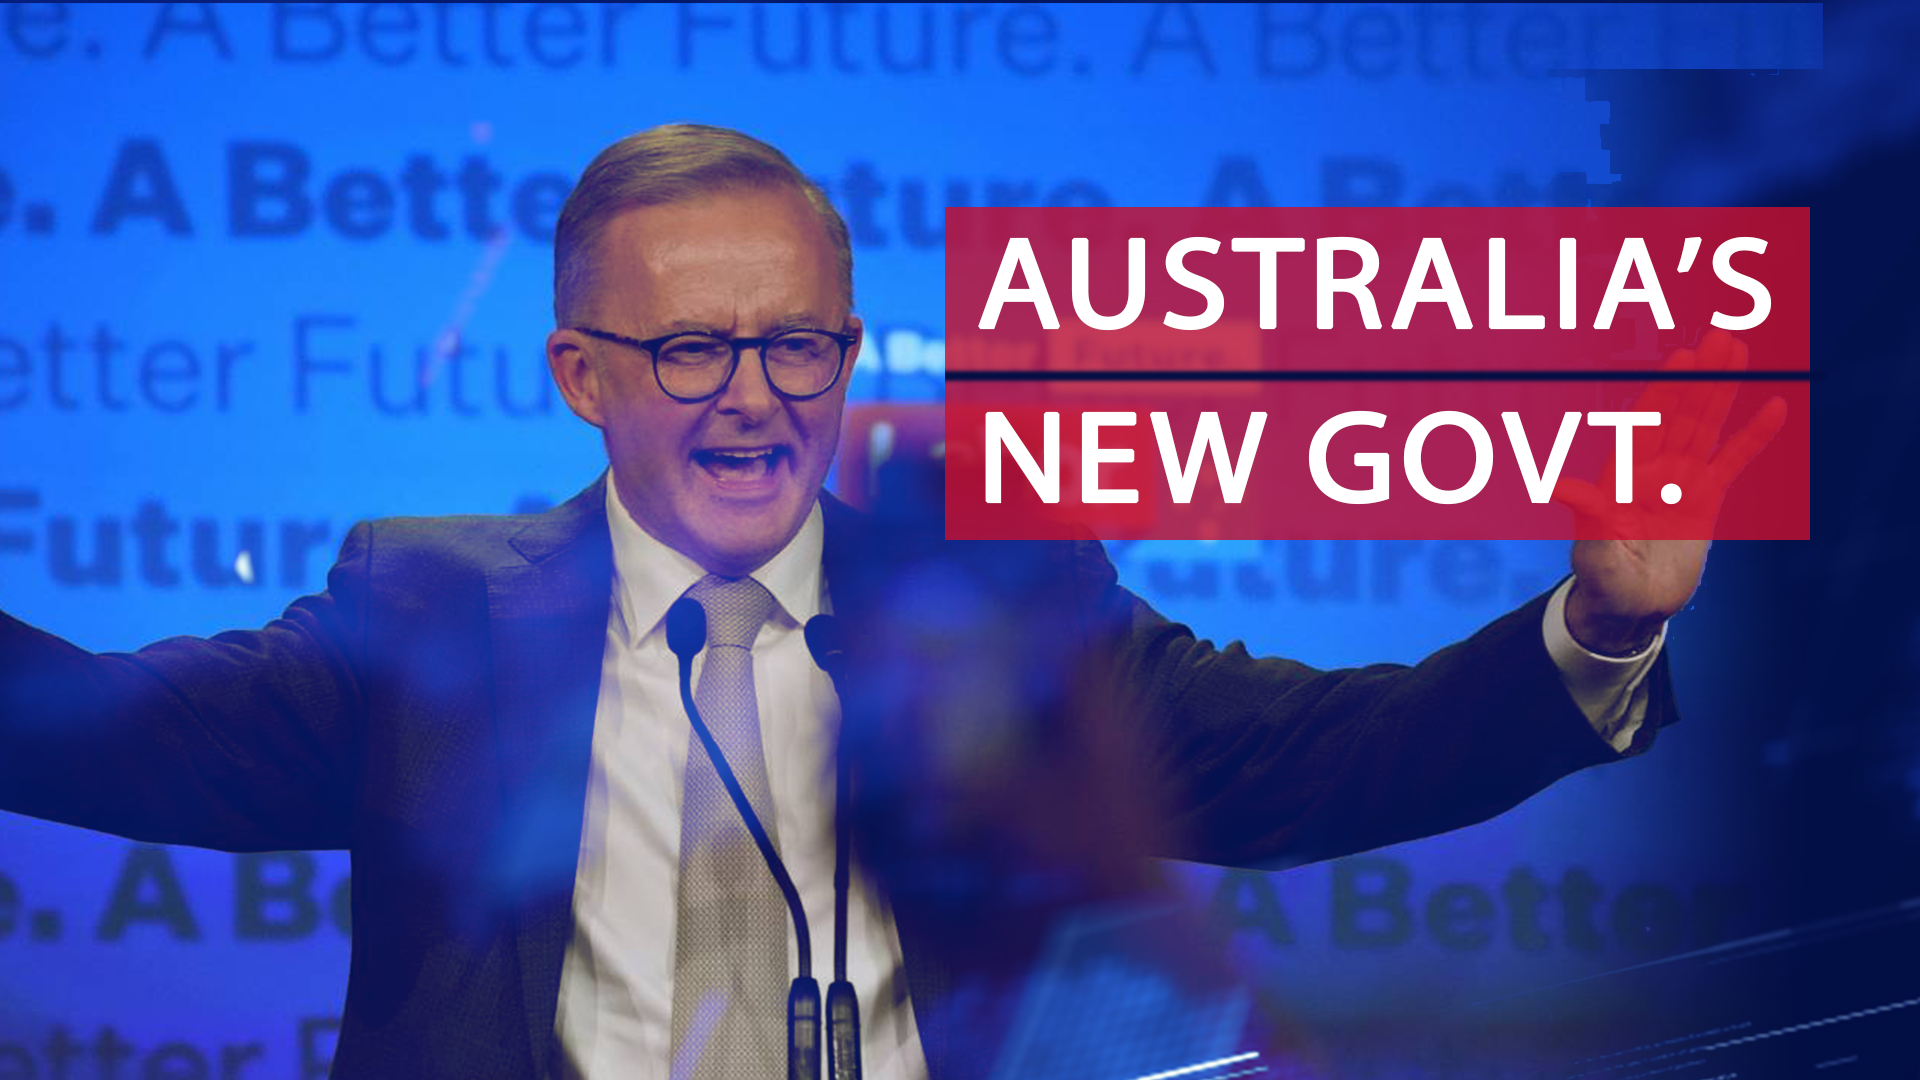 Australia’s new government